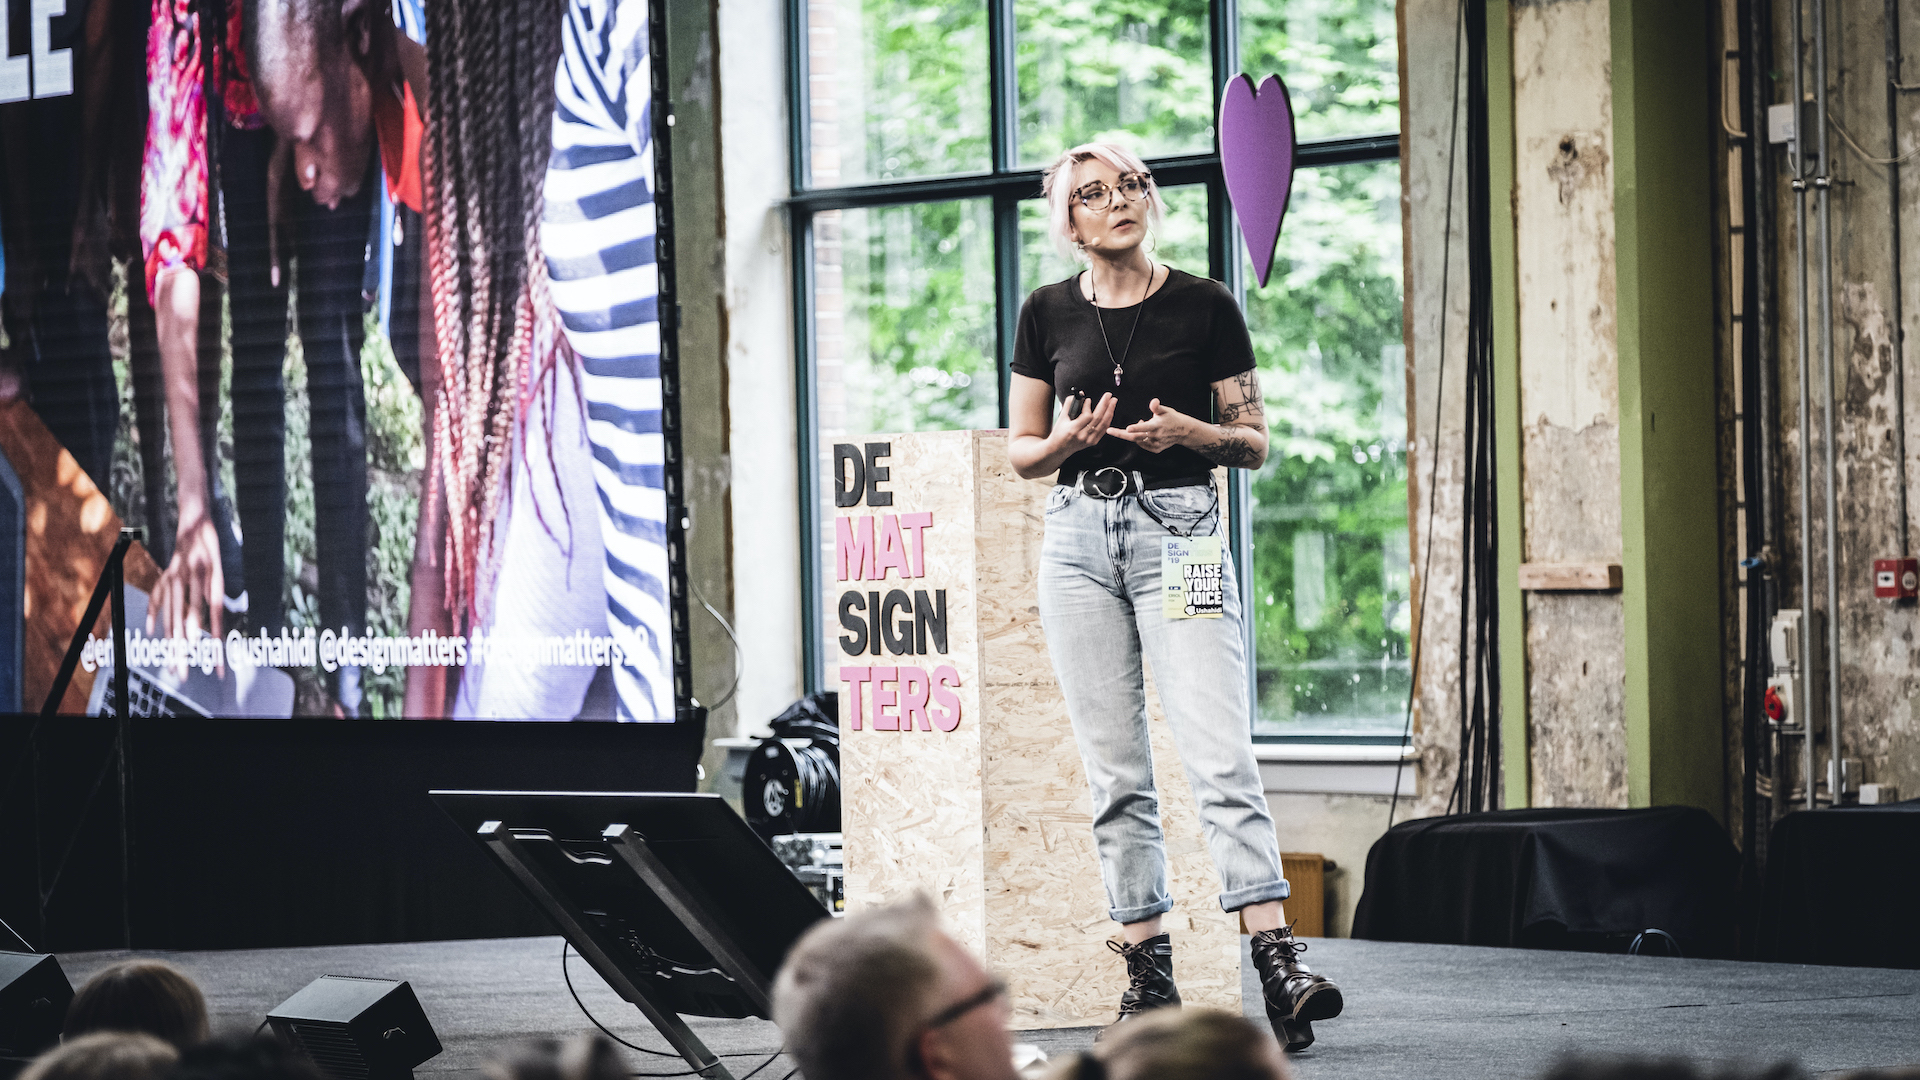 Eriol Fox on stage at Design Matters 2019 in Copenhagen.